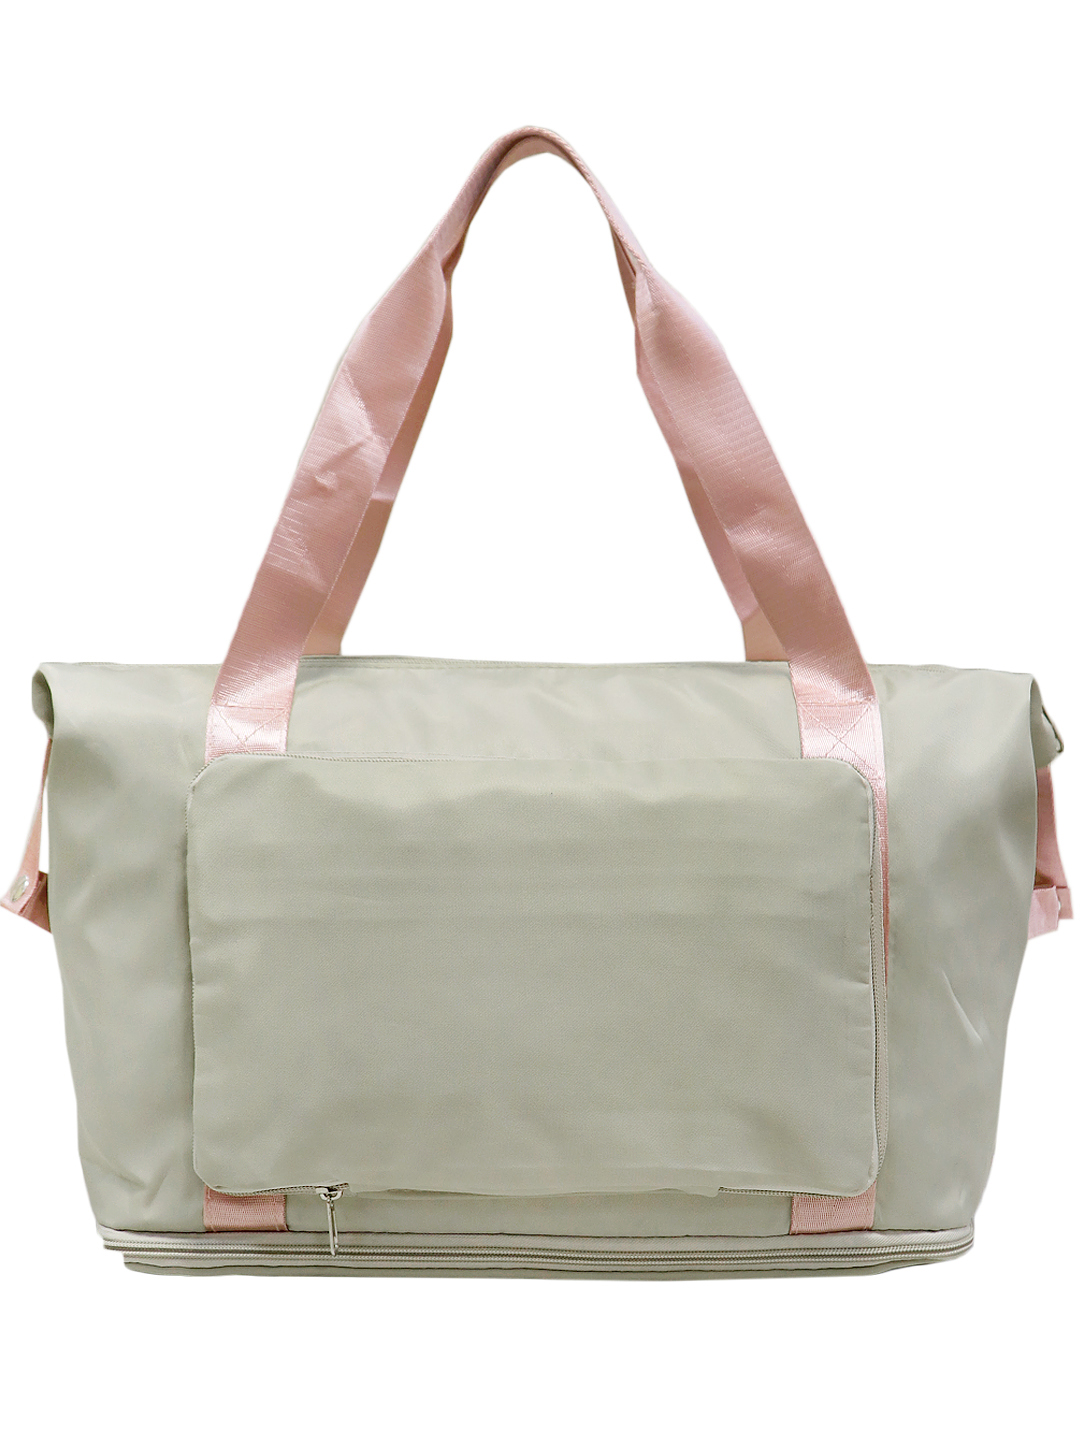 Дорожная сумка женская Caramelo 202201-3 кремовая/розовая, 26х42х20 см